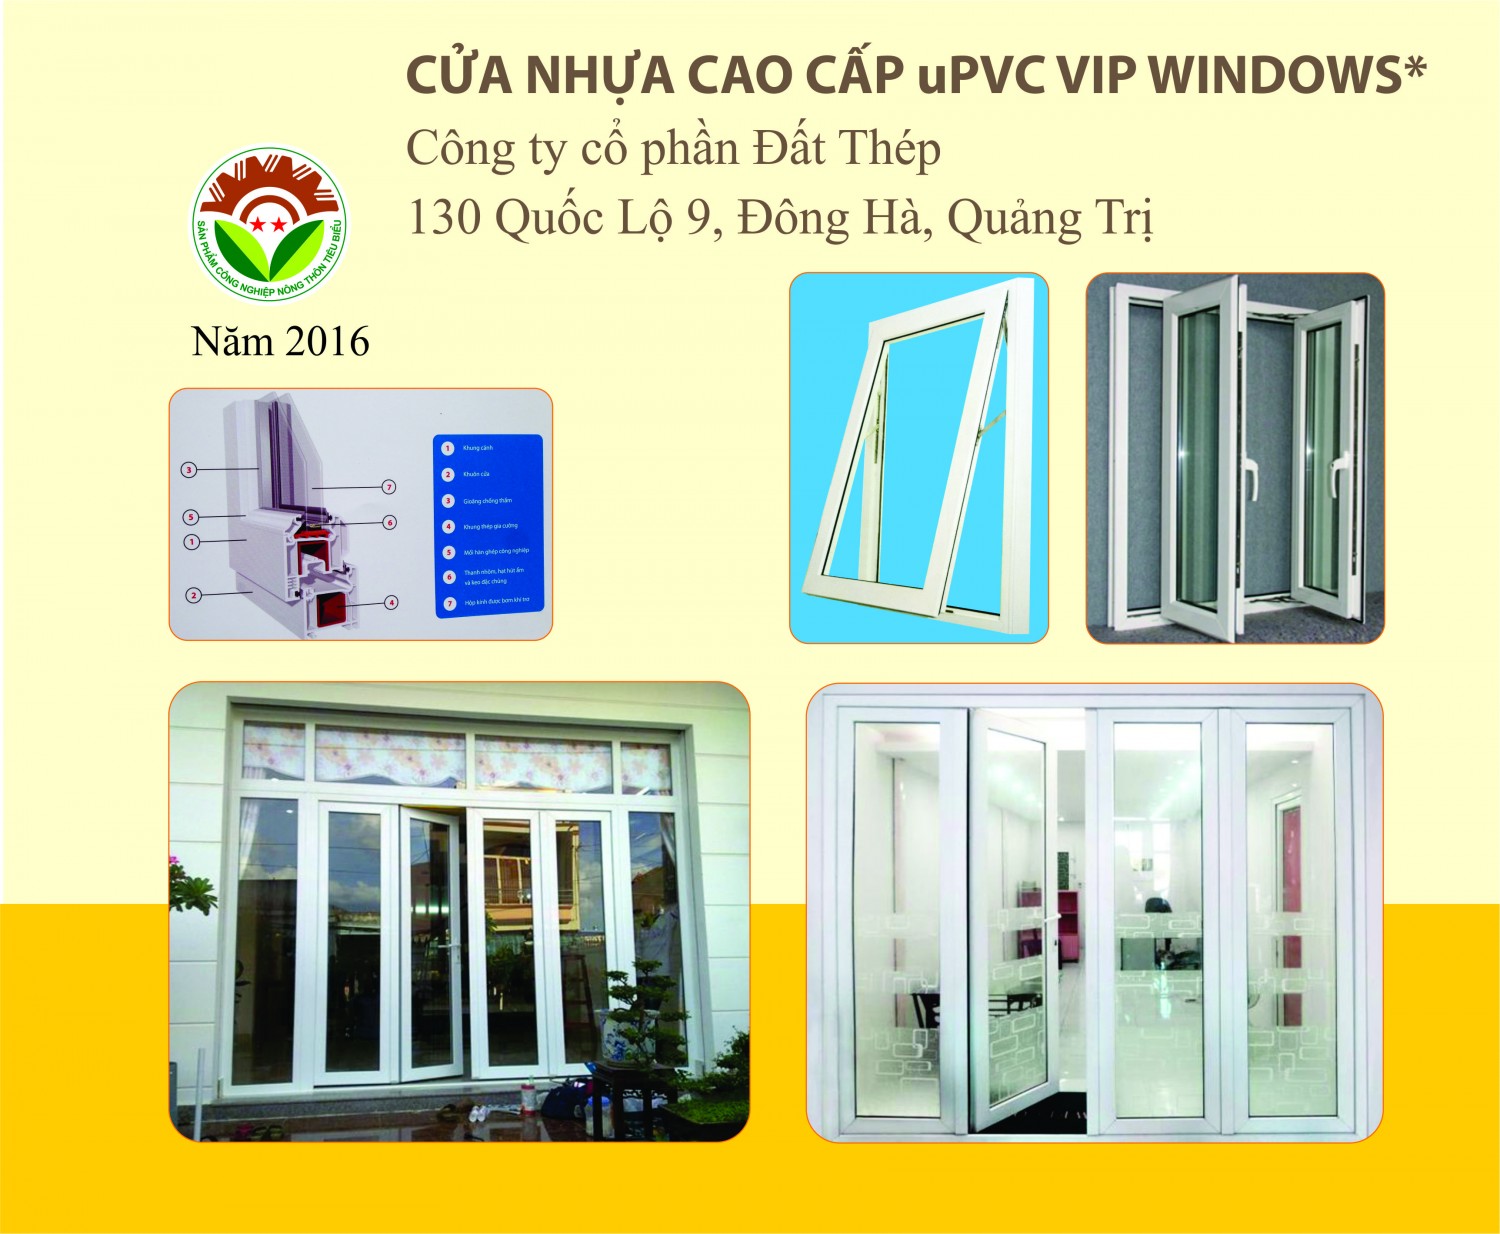 Cửa nhựa cao cấp uPCV vip windows